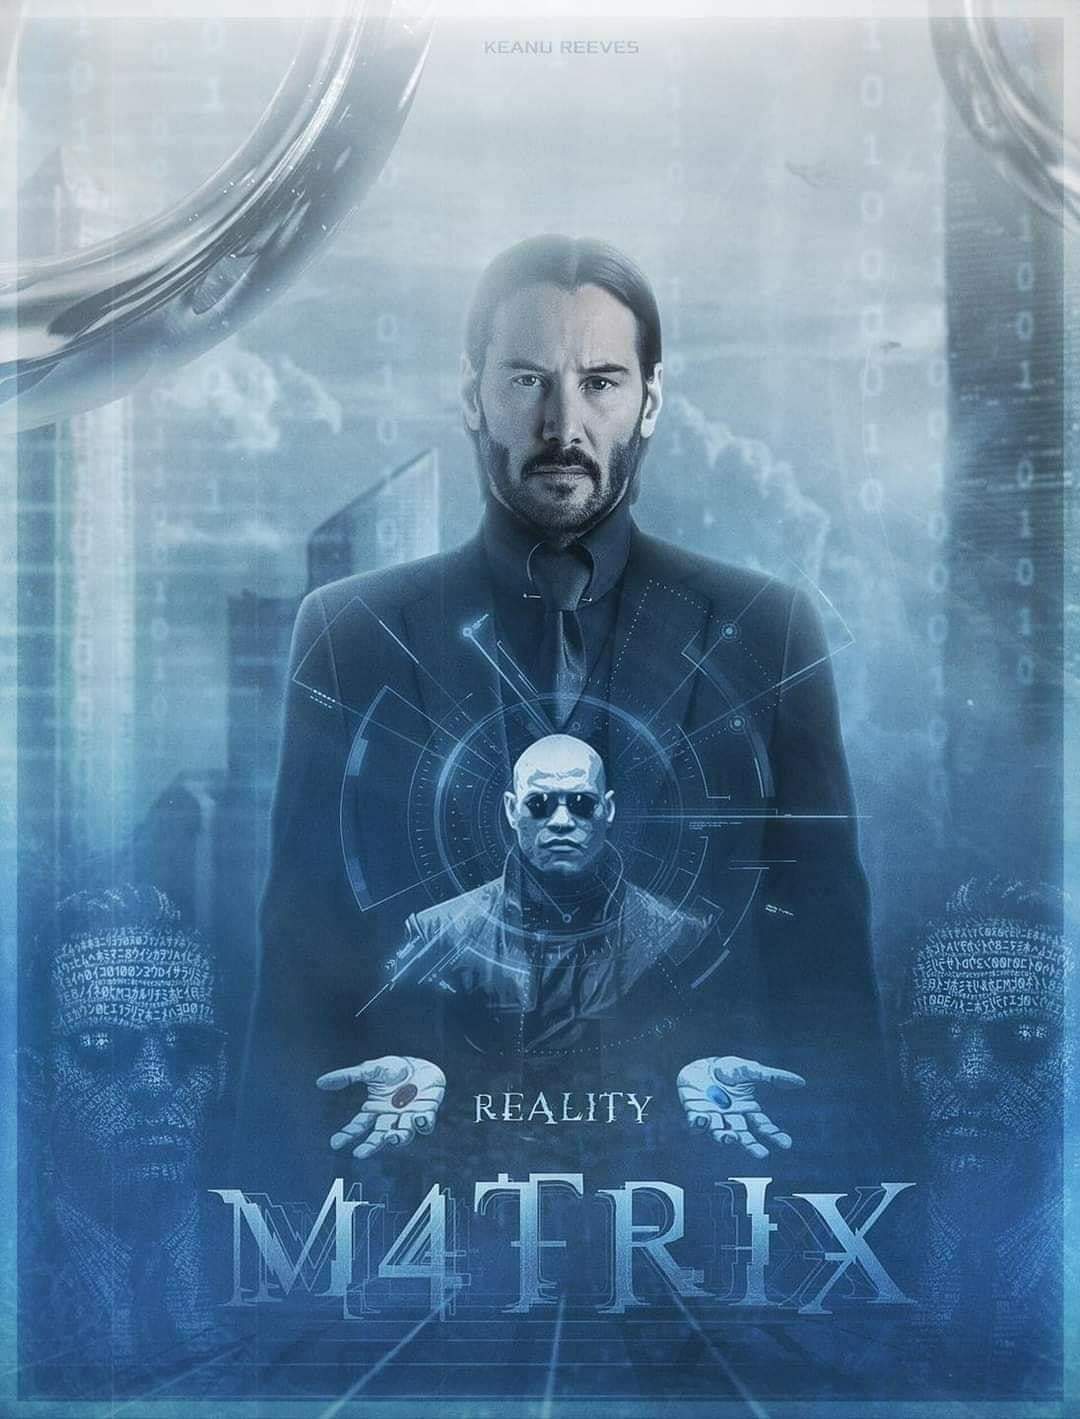 anticipated movies 2021 - matrix 4 poster - Keanu Reeves 13osa 1207UATU 0420108720015502 EbNiskutere Arbeites 0812 Atextcorge Lafon 8 Gte OG18 Engel8 Trdesetih Reality Matrix